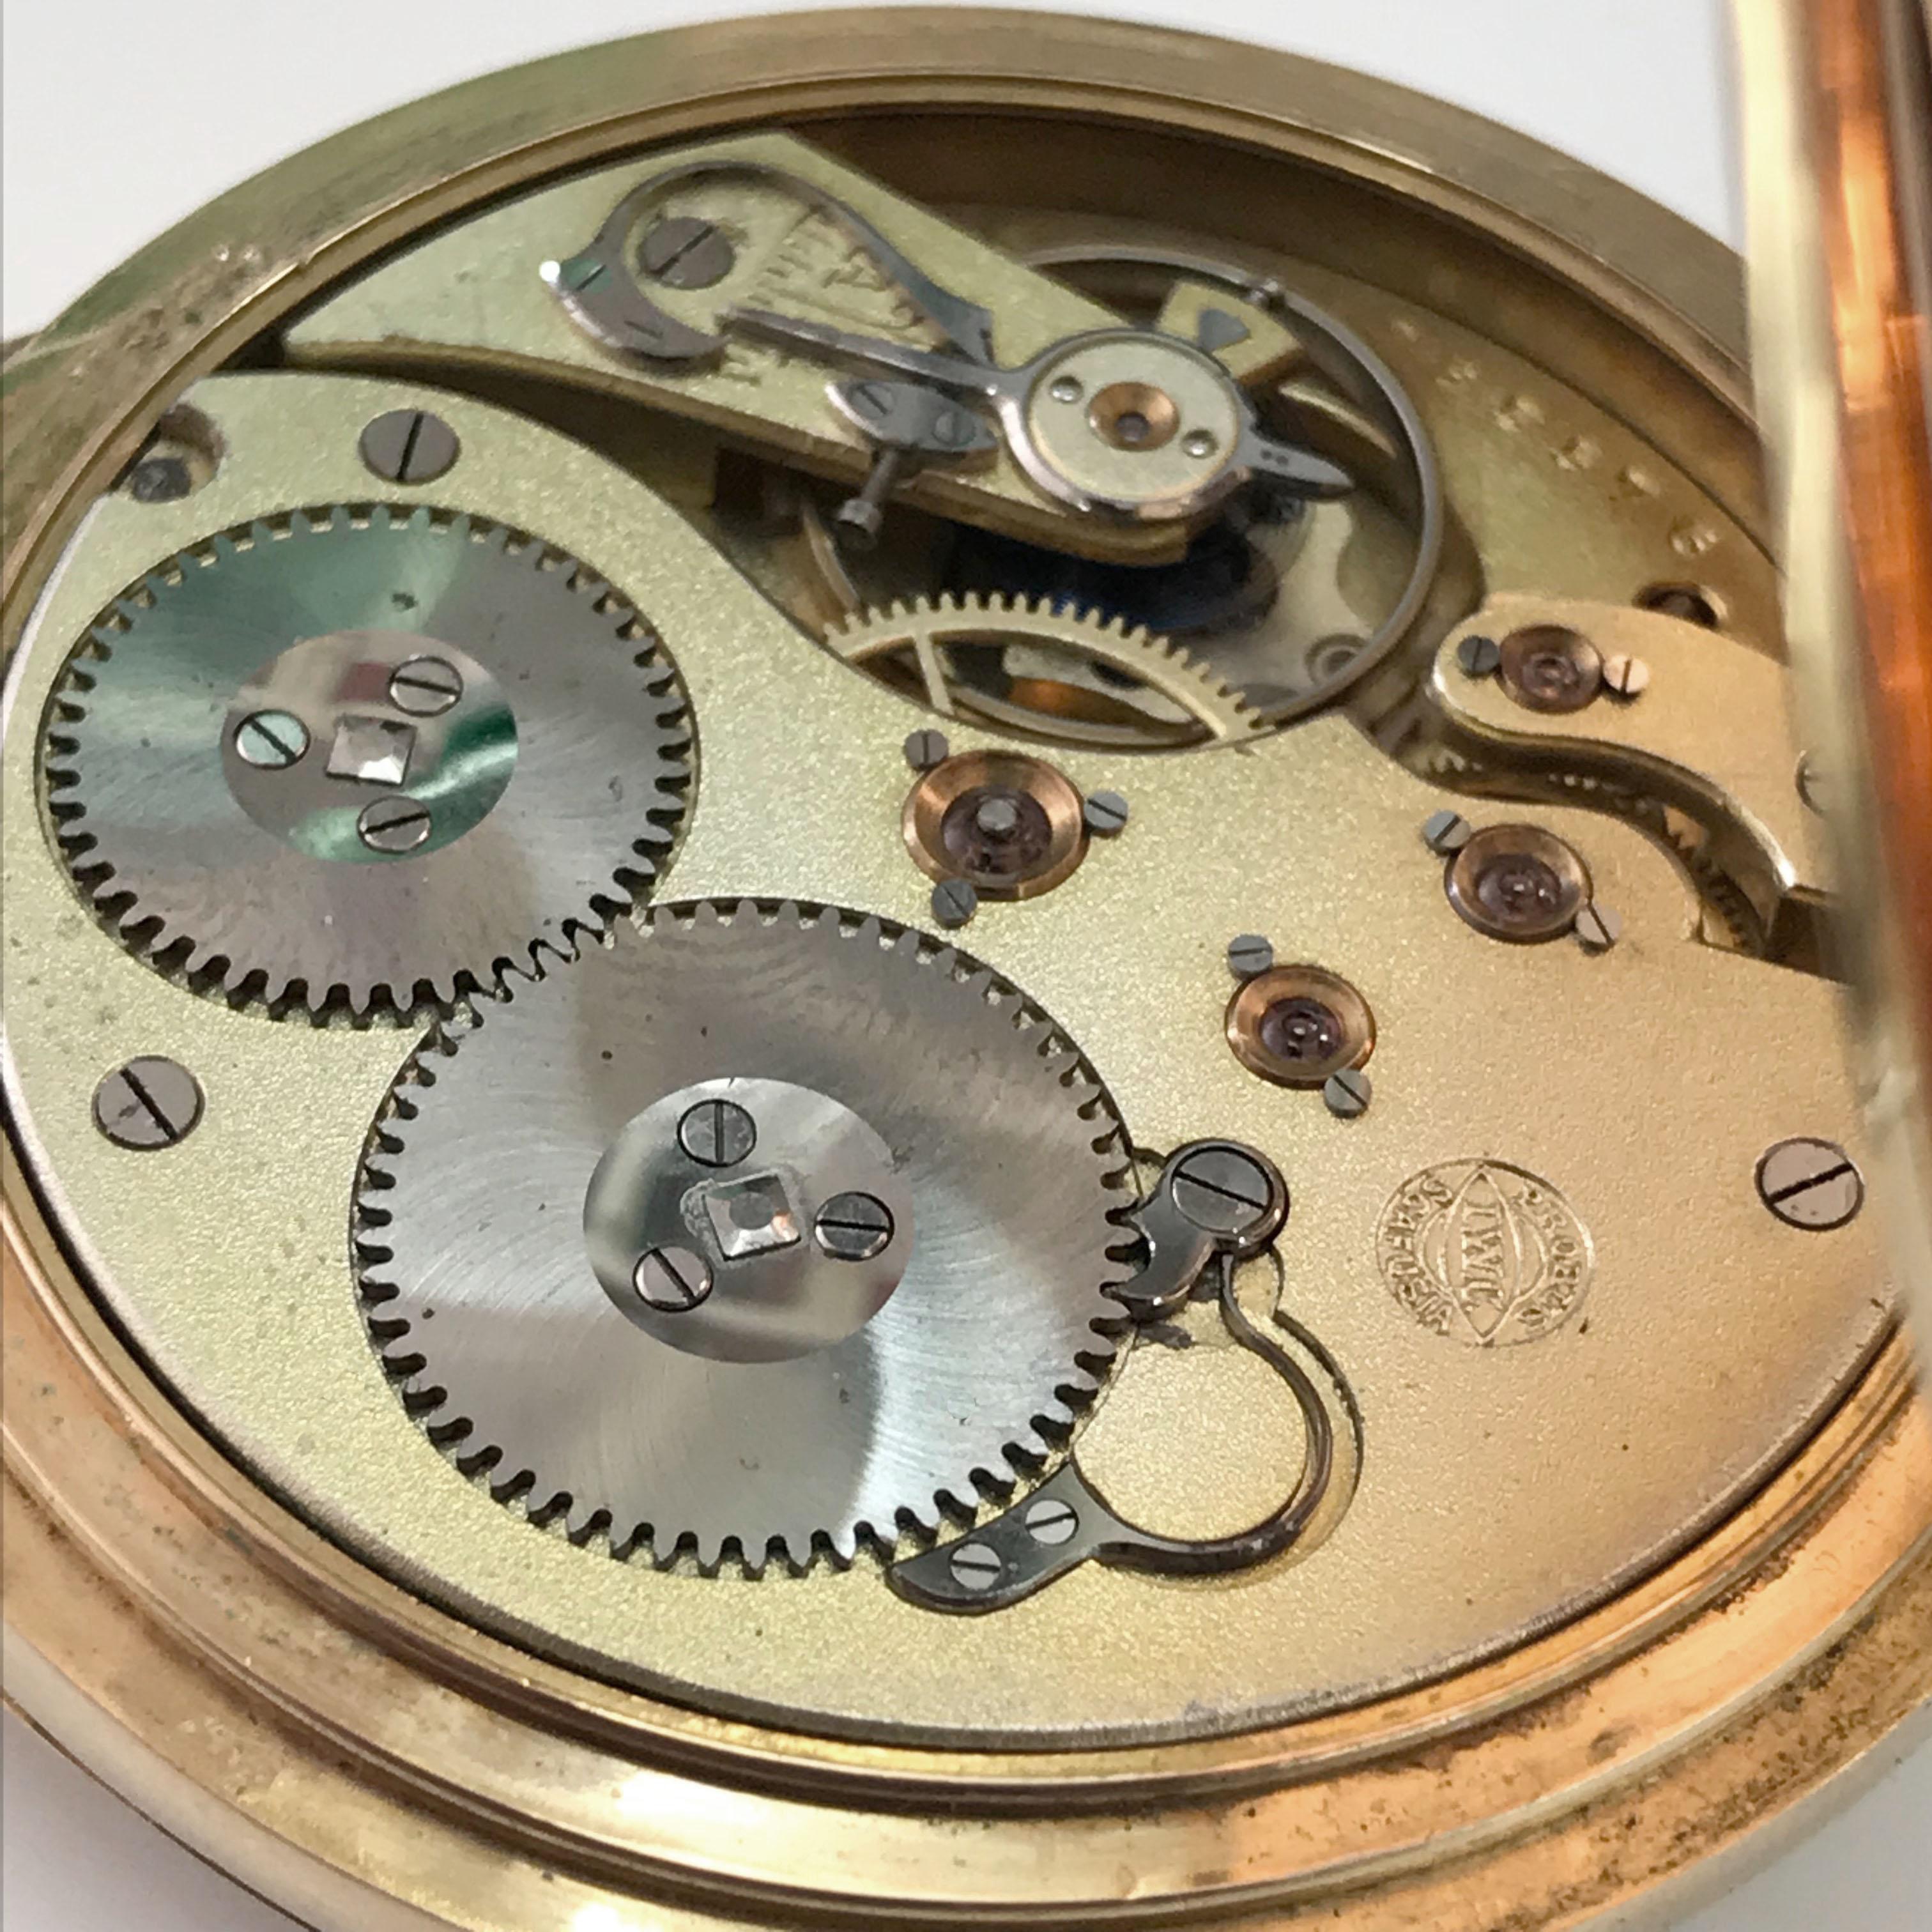 20th Century  IWC International Watch & Co pocket watch in 18 karat gold. 1910s Swiss Made